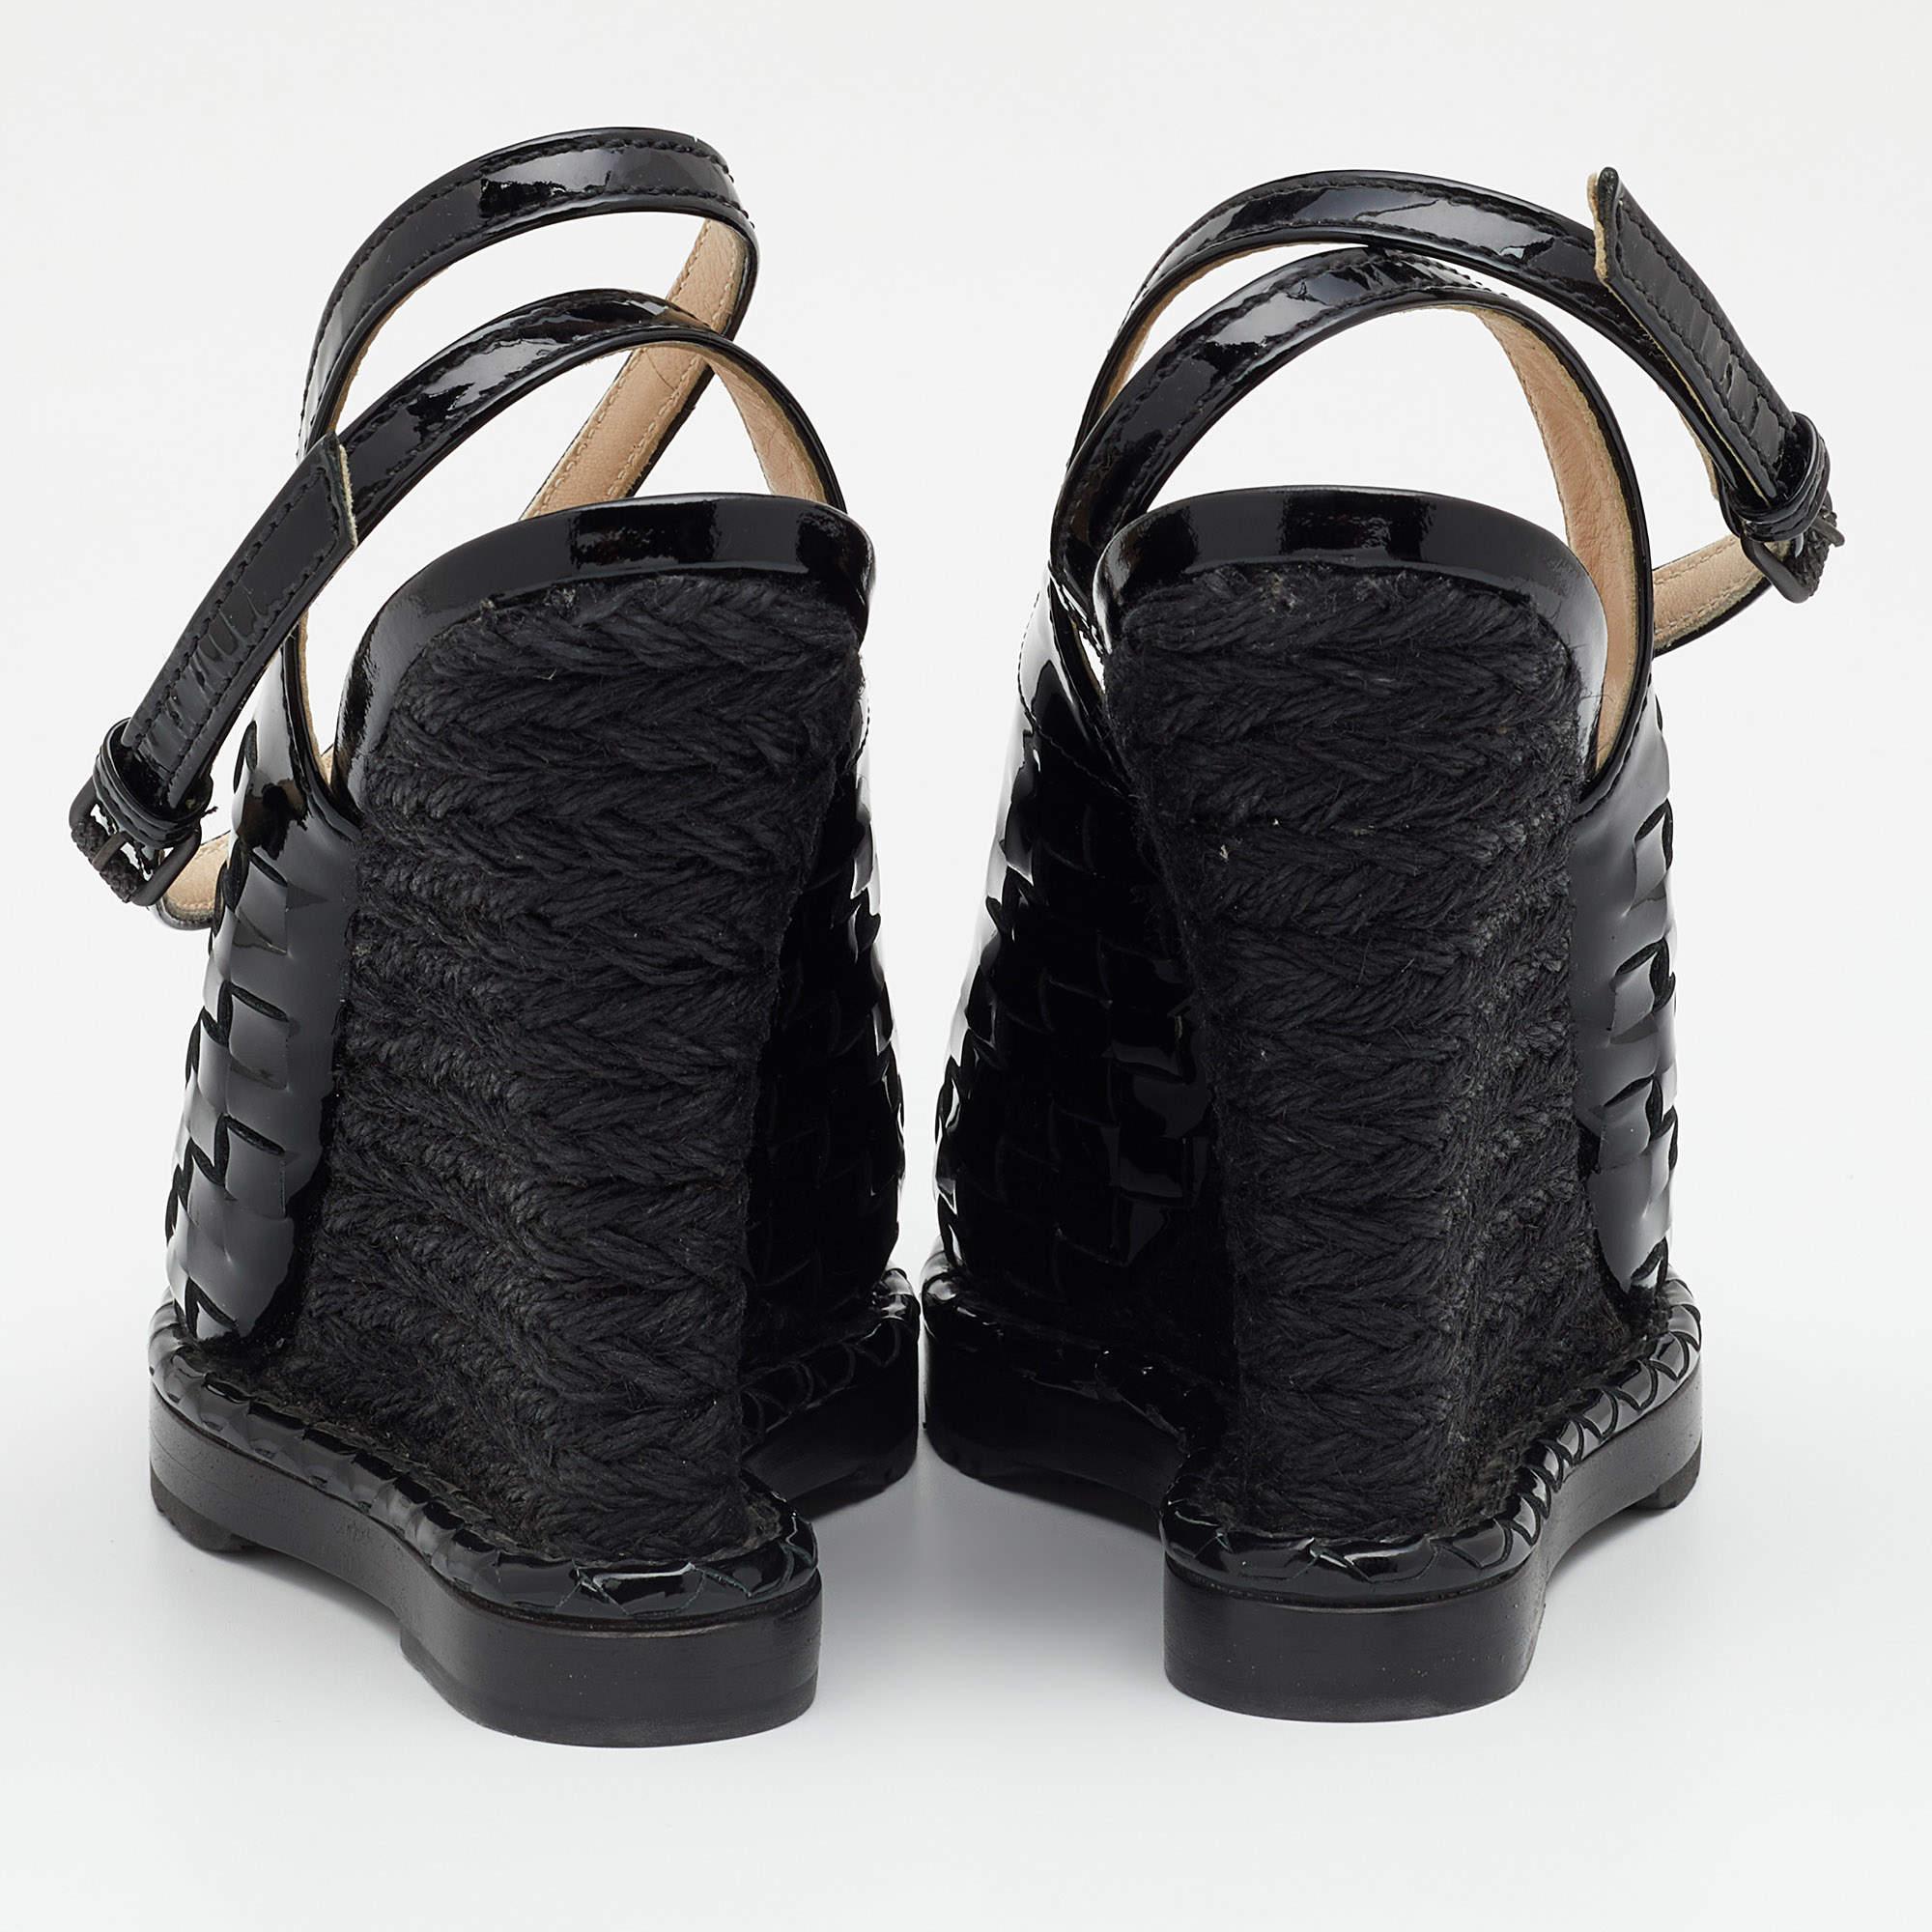 Bottega Veneta Black Intrecciato Patent Leather Wedge Sandals Size 38 In Good Condition For Sale In Dubai, Al Qouz 2